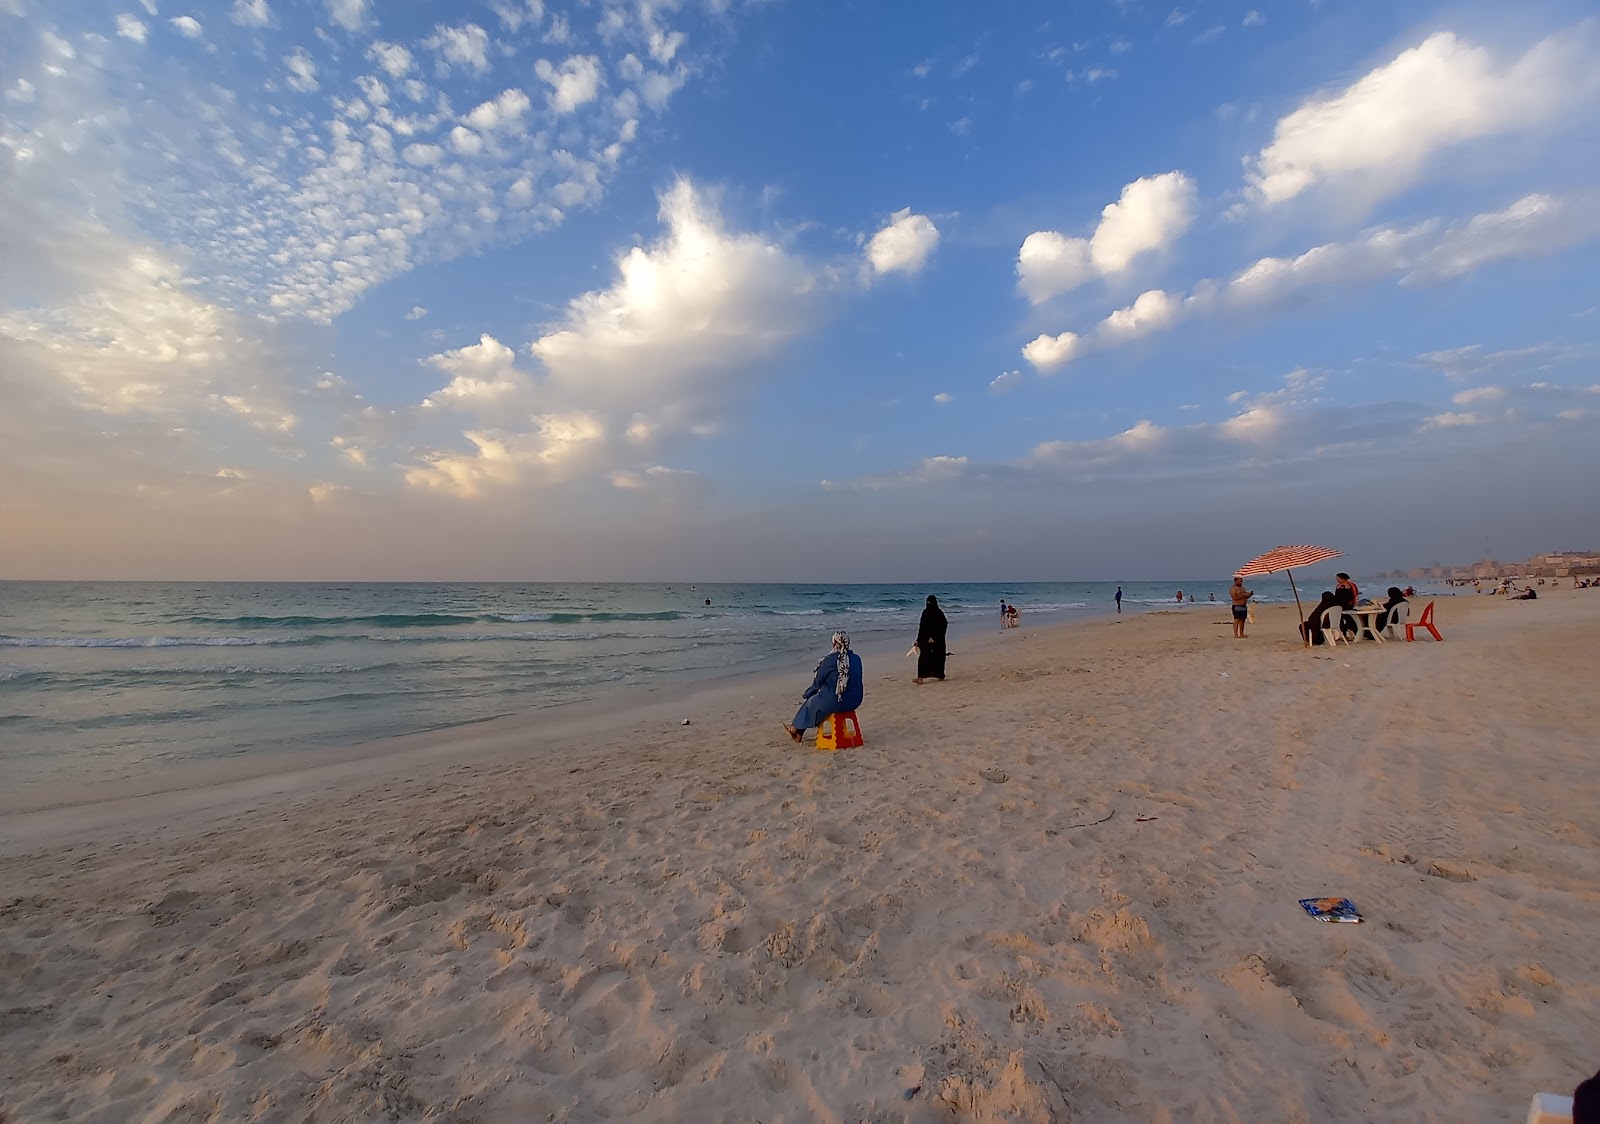 Photo of Hanouville Public Beach - popular place among relax connoisseurs